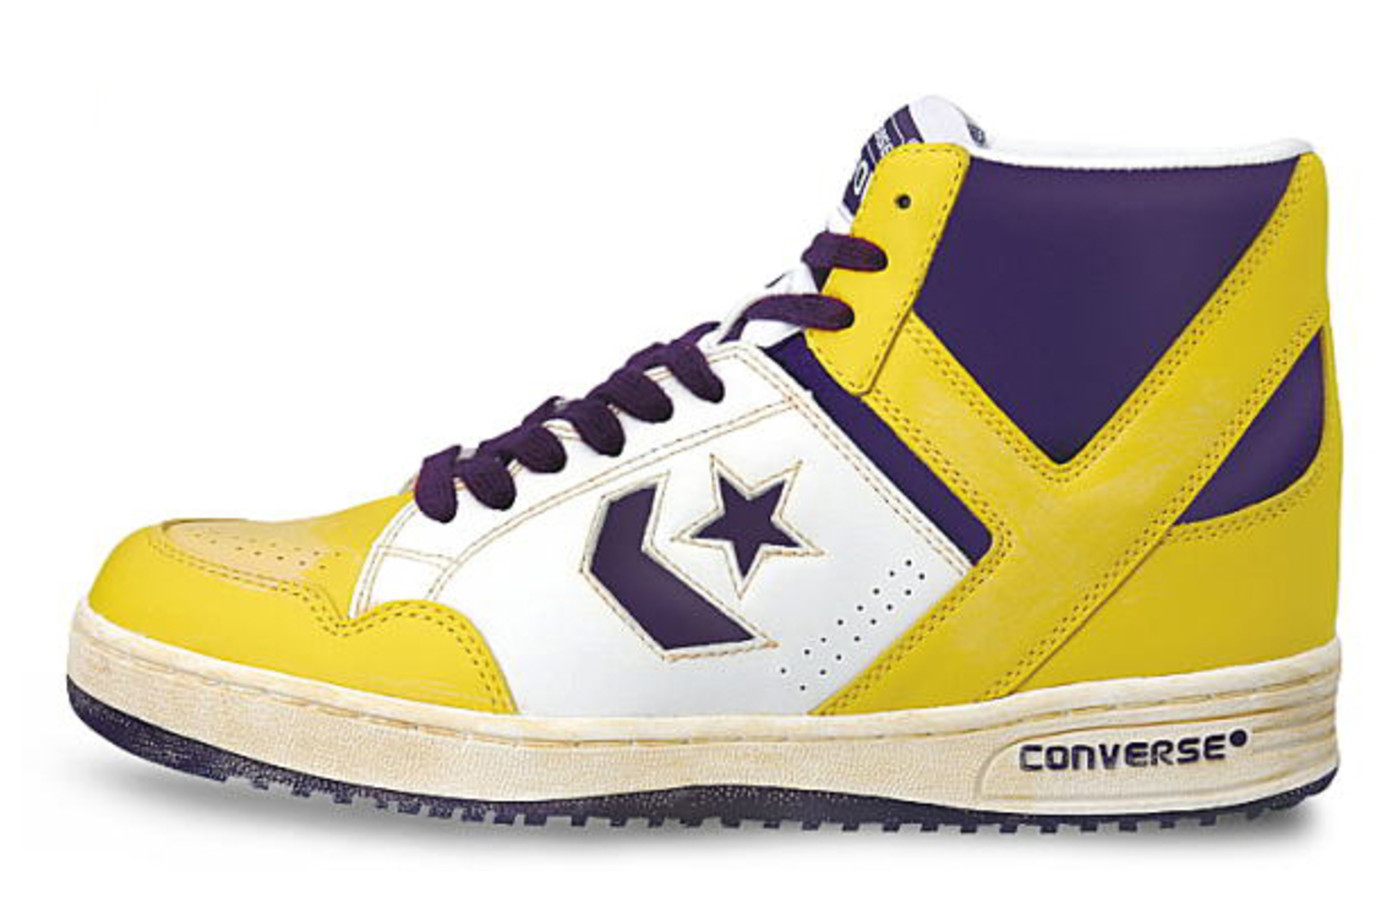 converse cons basketball shoes 1987